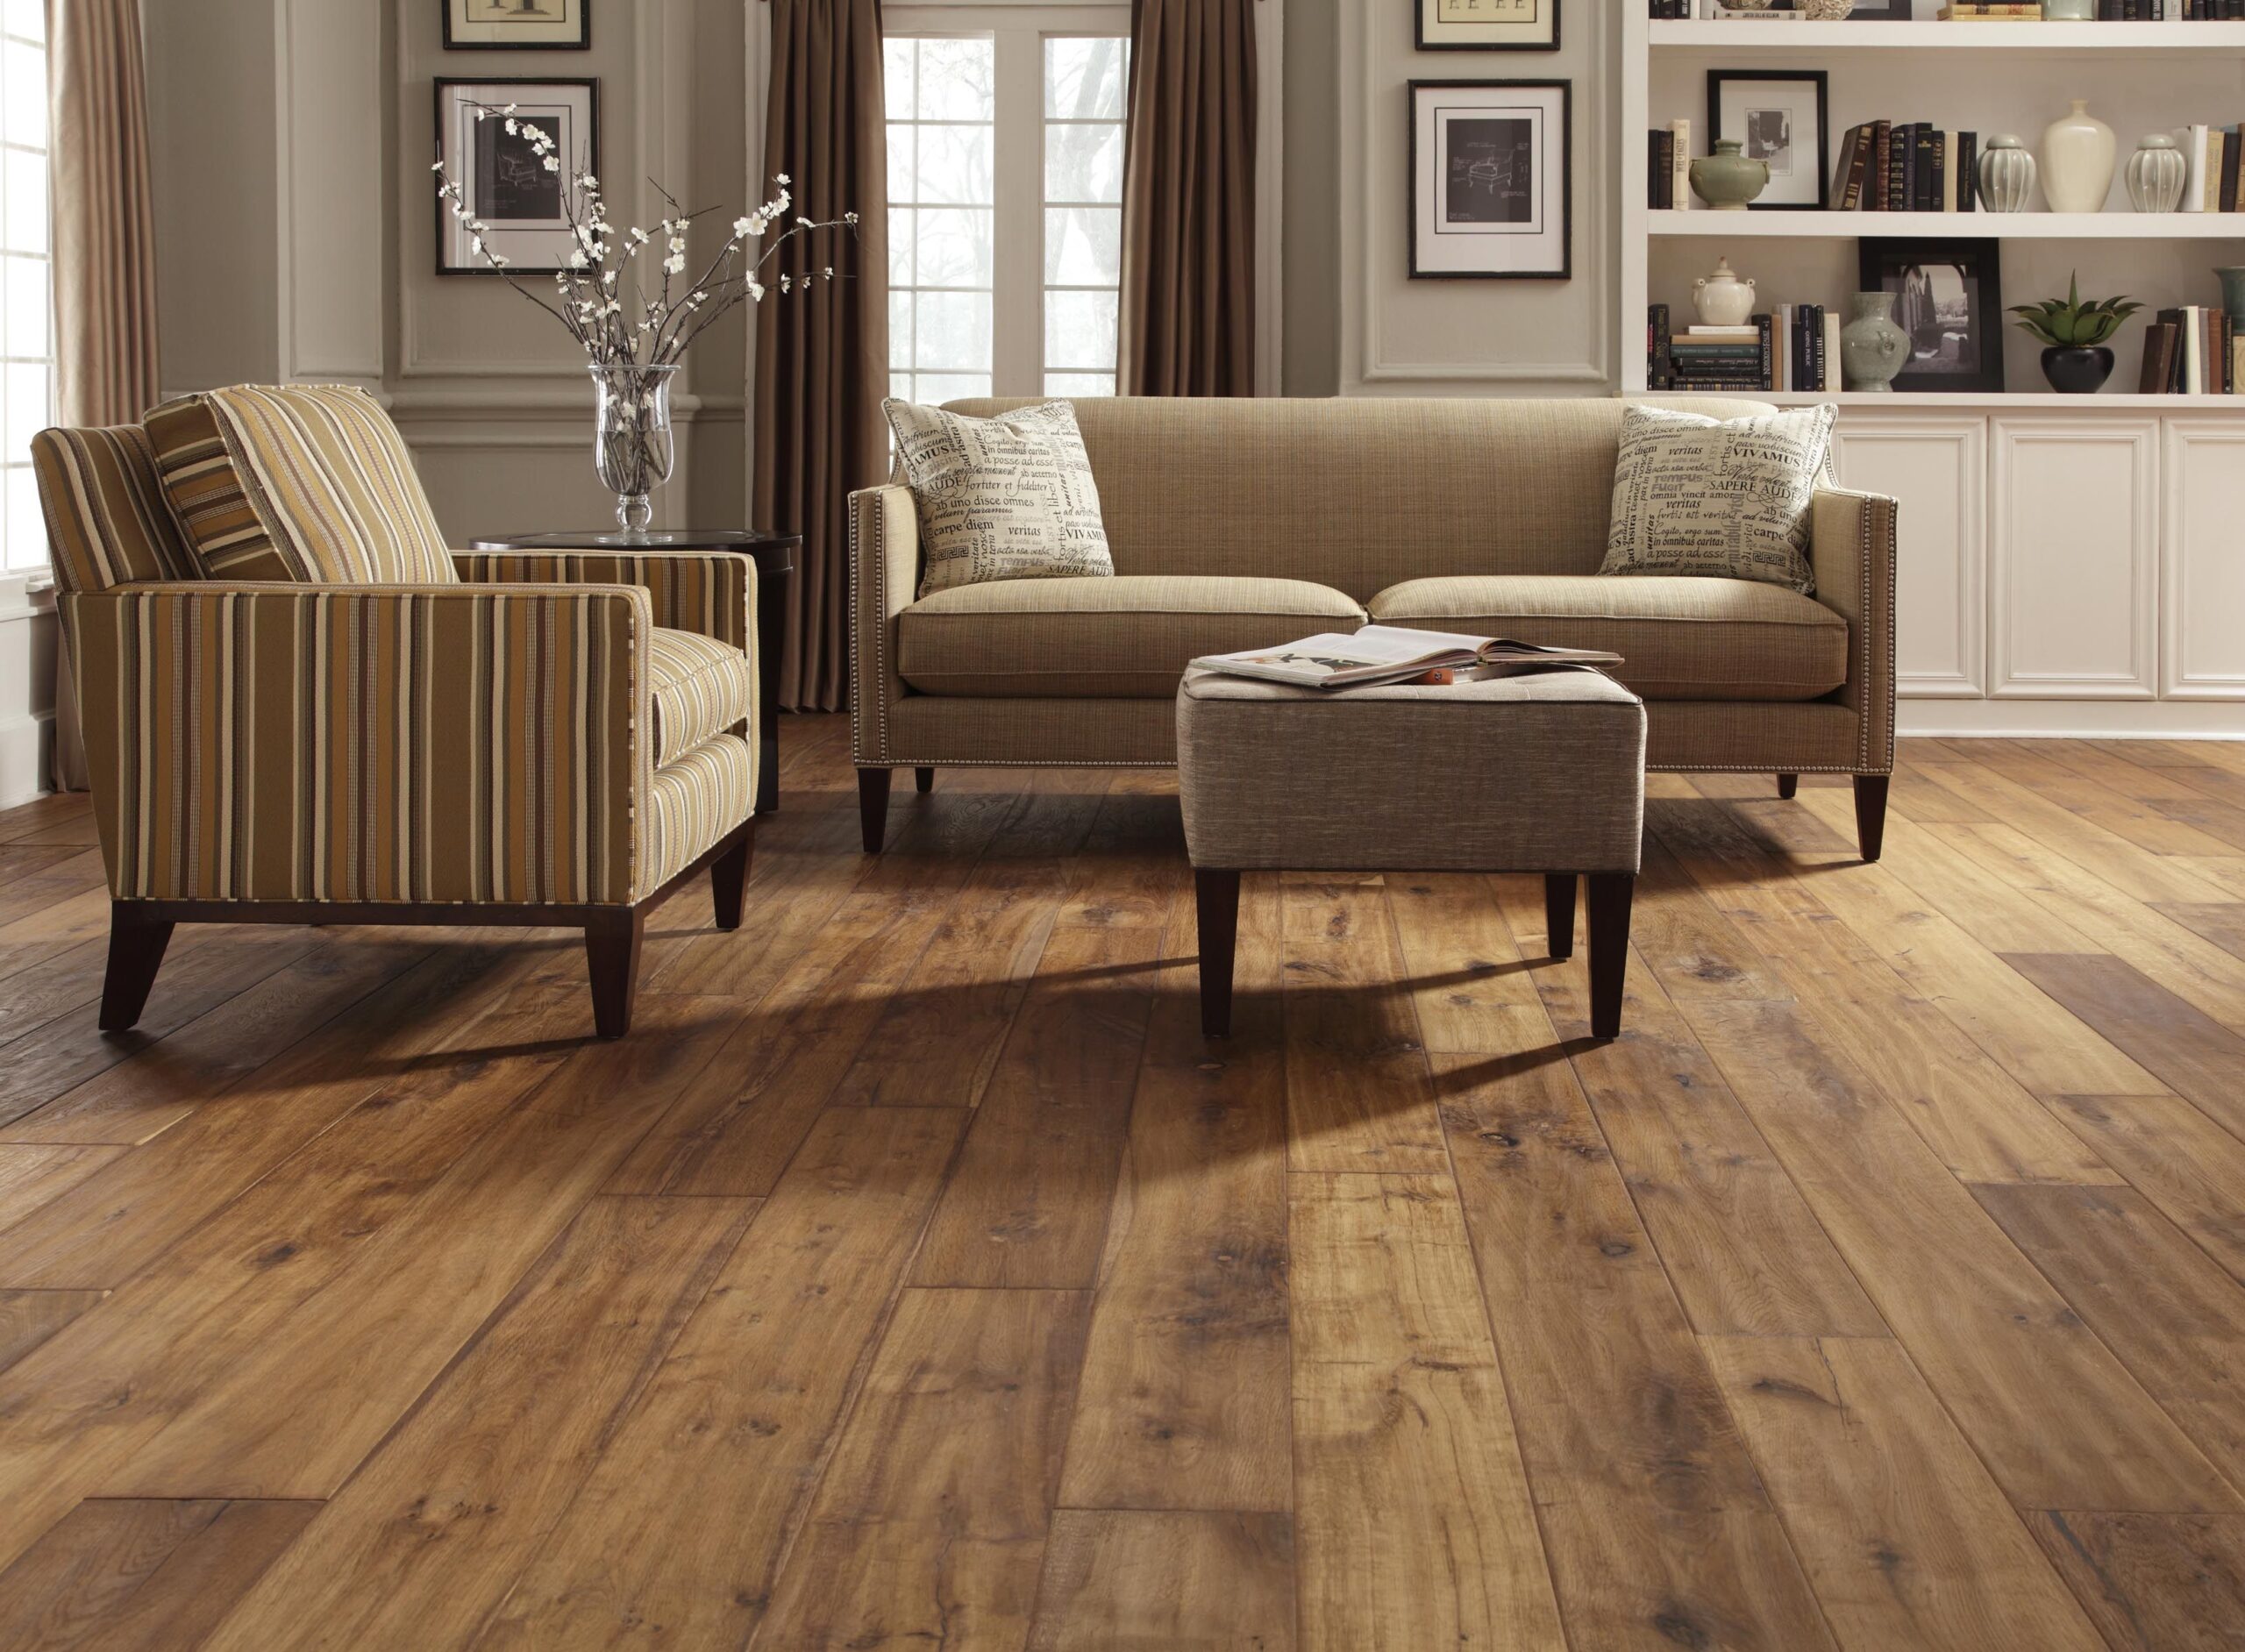 5 Best Laminate Flooring Colours For, Is Laminate Flooring Good For Living Room